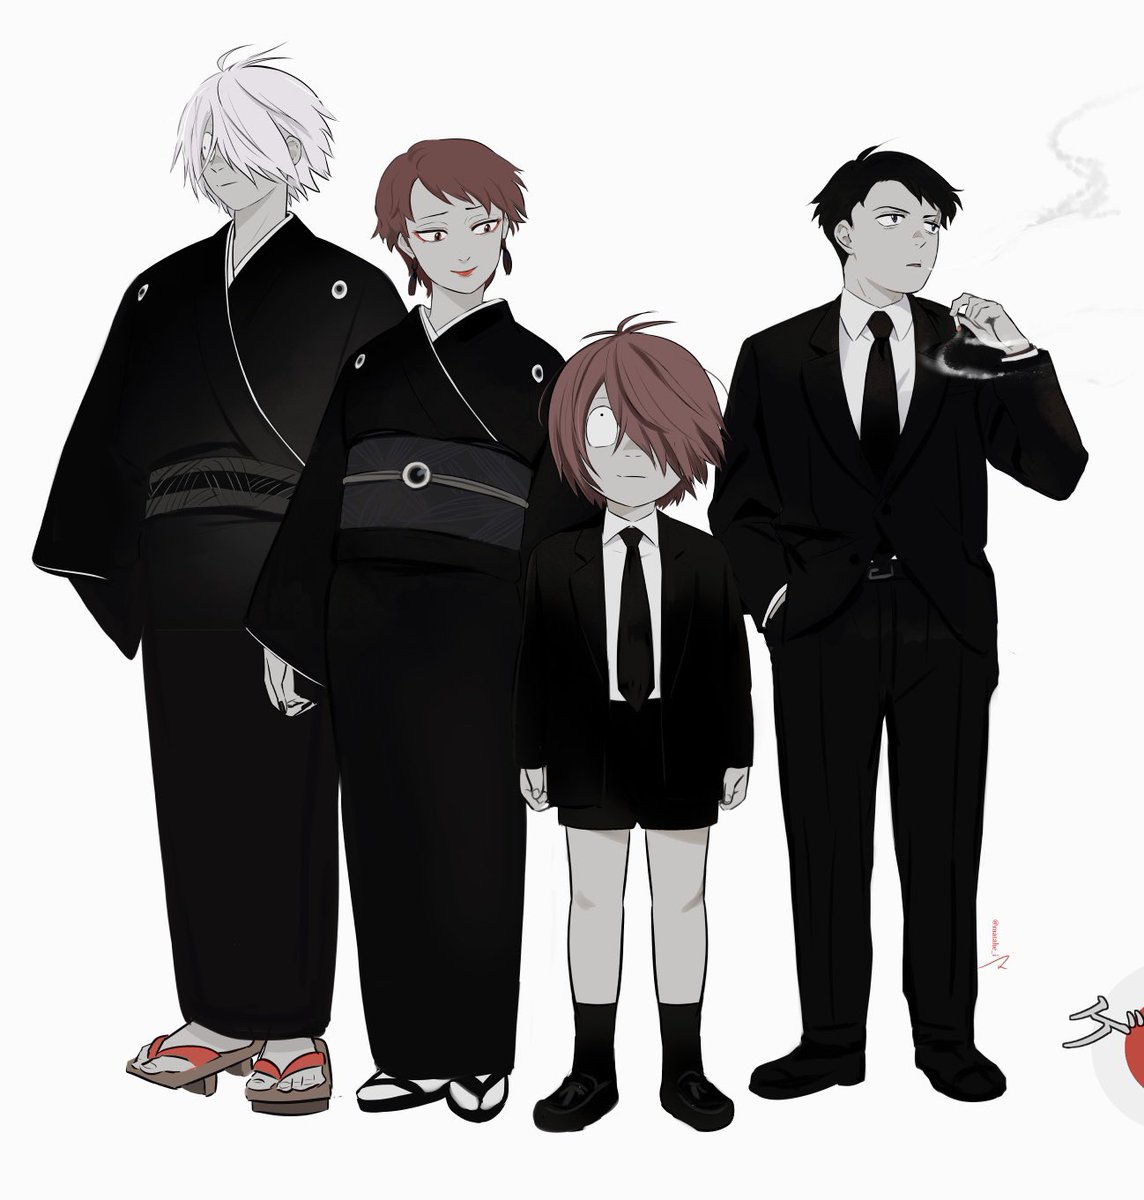 multiple boys cigarette formal necktie suit hair over one eye japanese clothes  illustration images